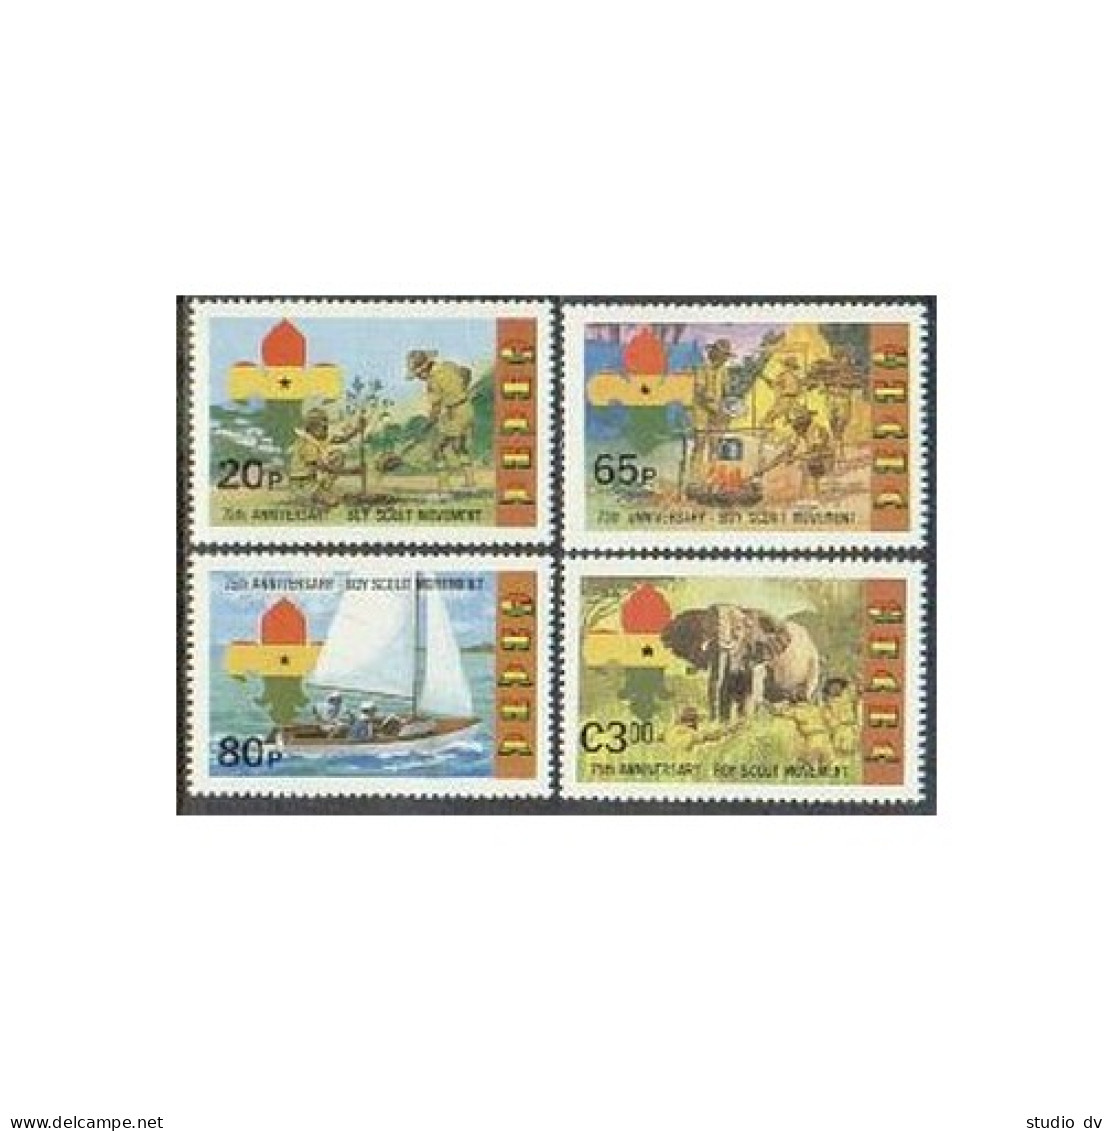 Ghana 794-797,MNH.Michel 940-943. Scouting Year 1982,Sailing Boat,Elephant. - Preobliterati